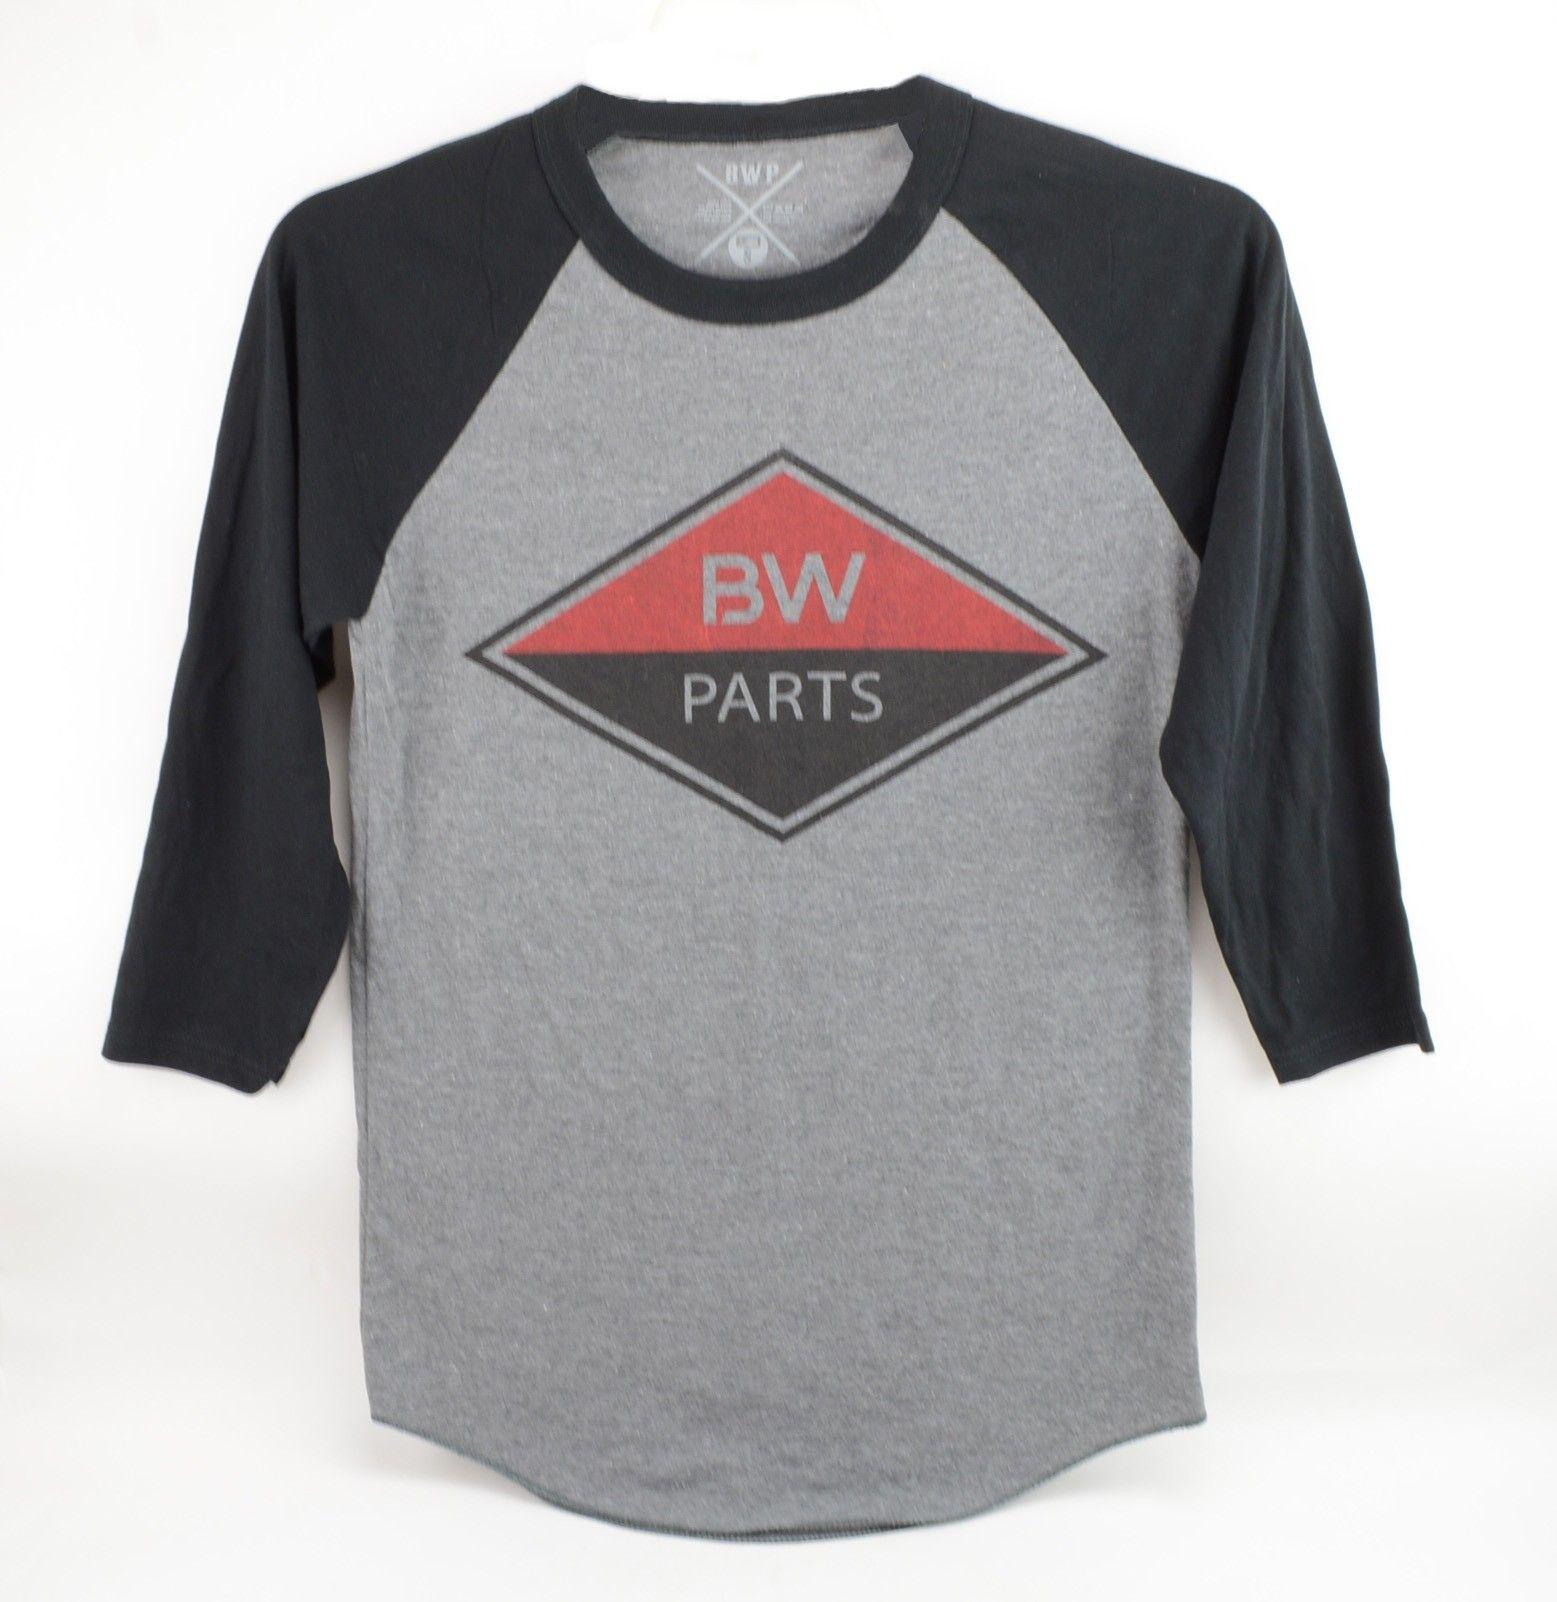 Black and Red Diamond Logo - BWPARTS Red and Black Diamond Logo Shirt - BW Parts